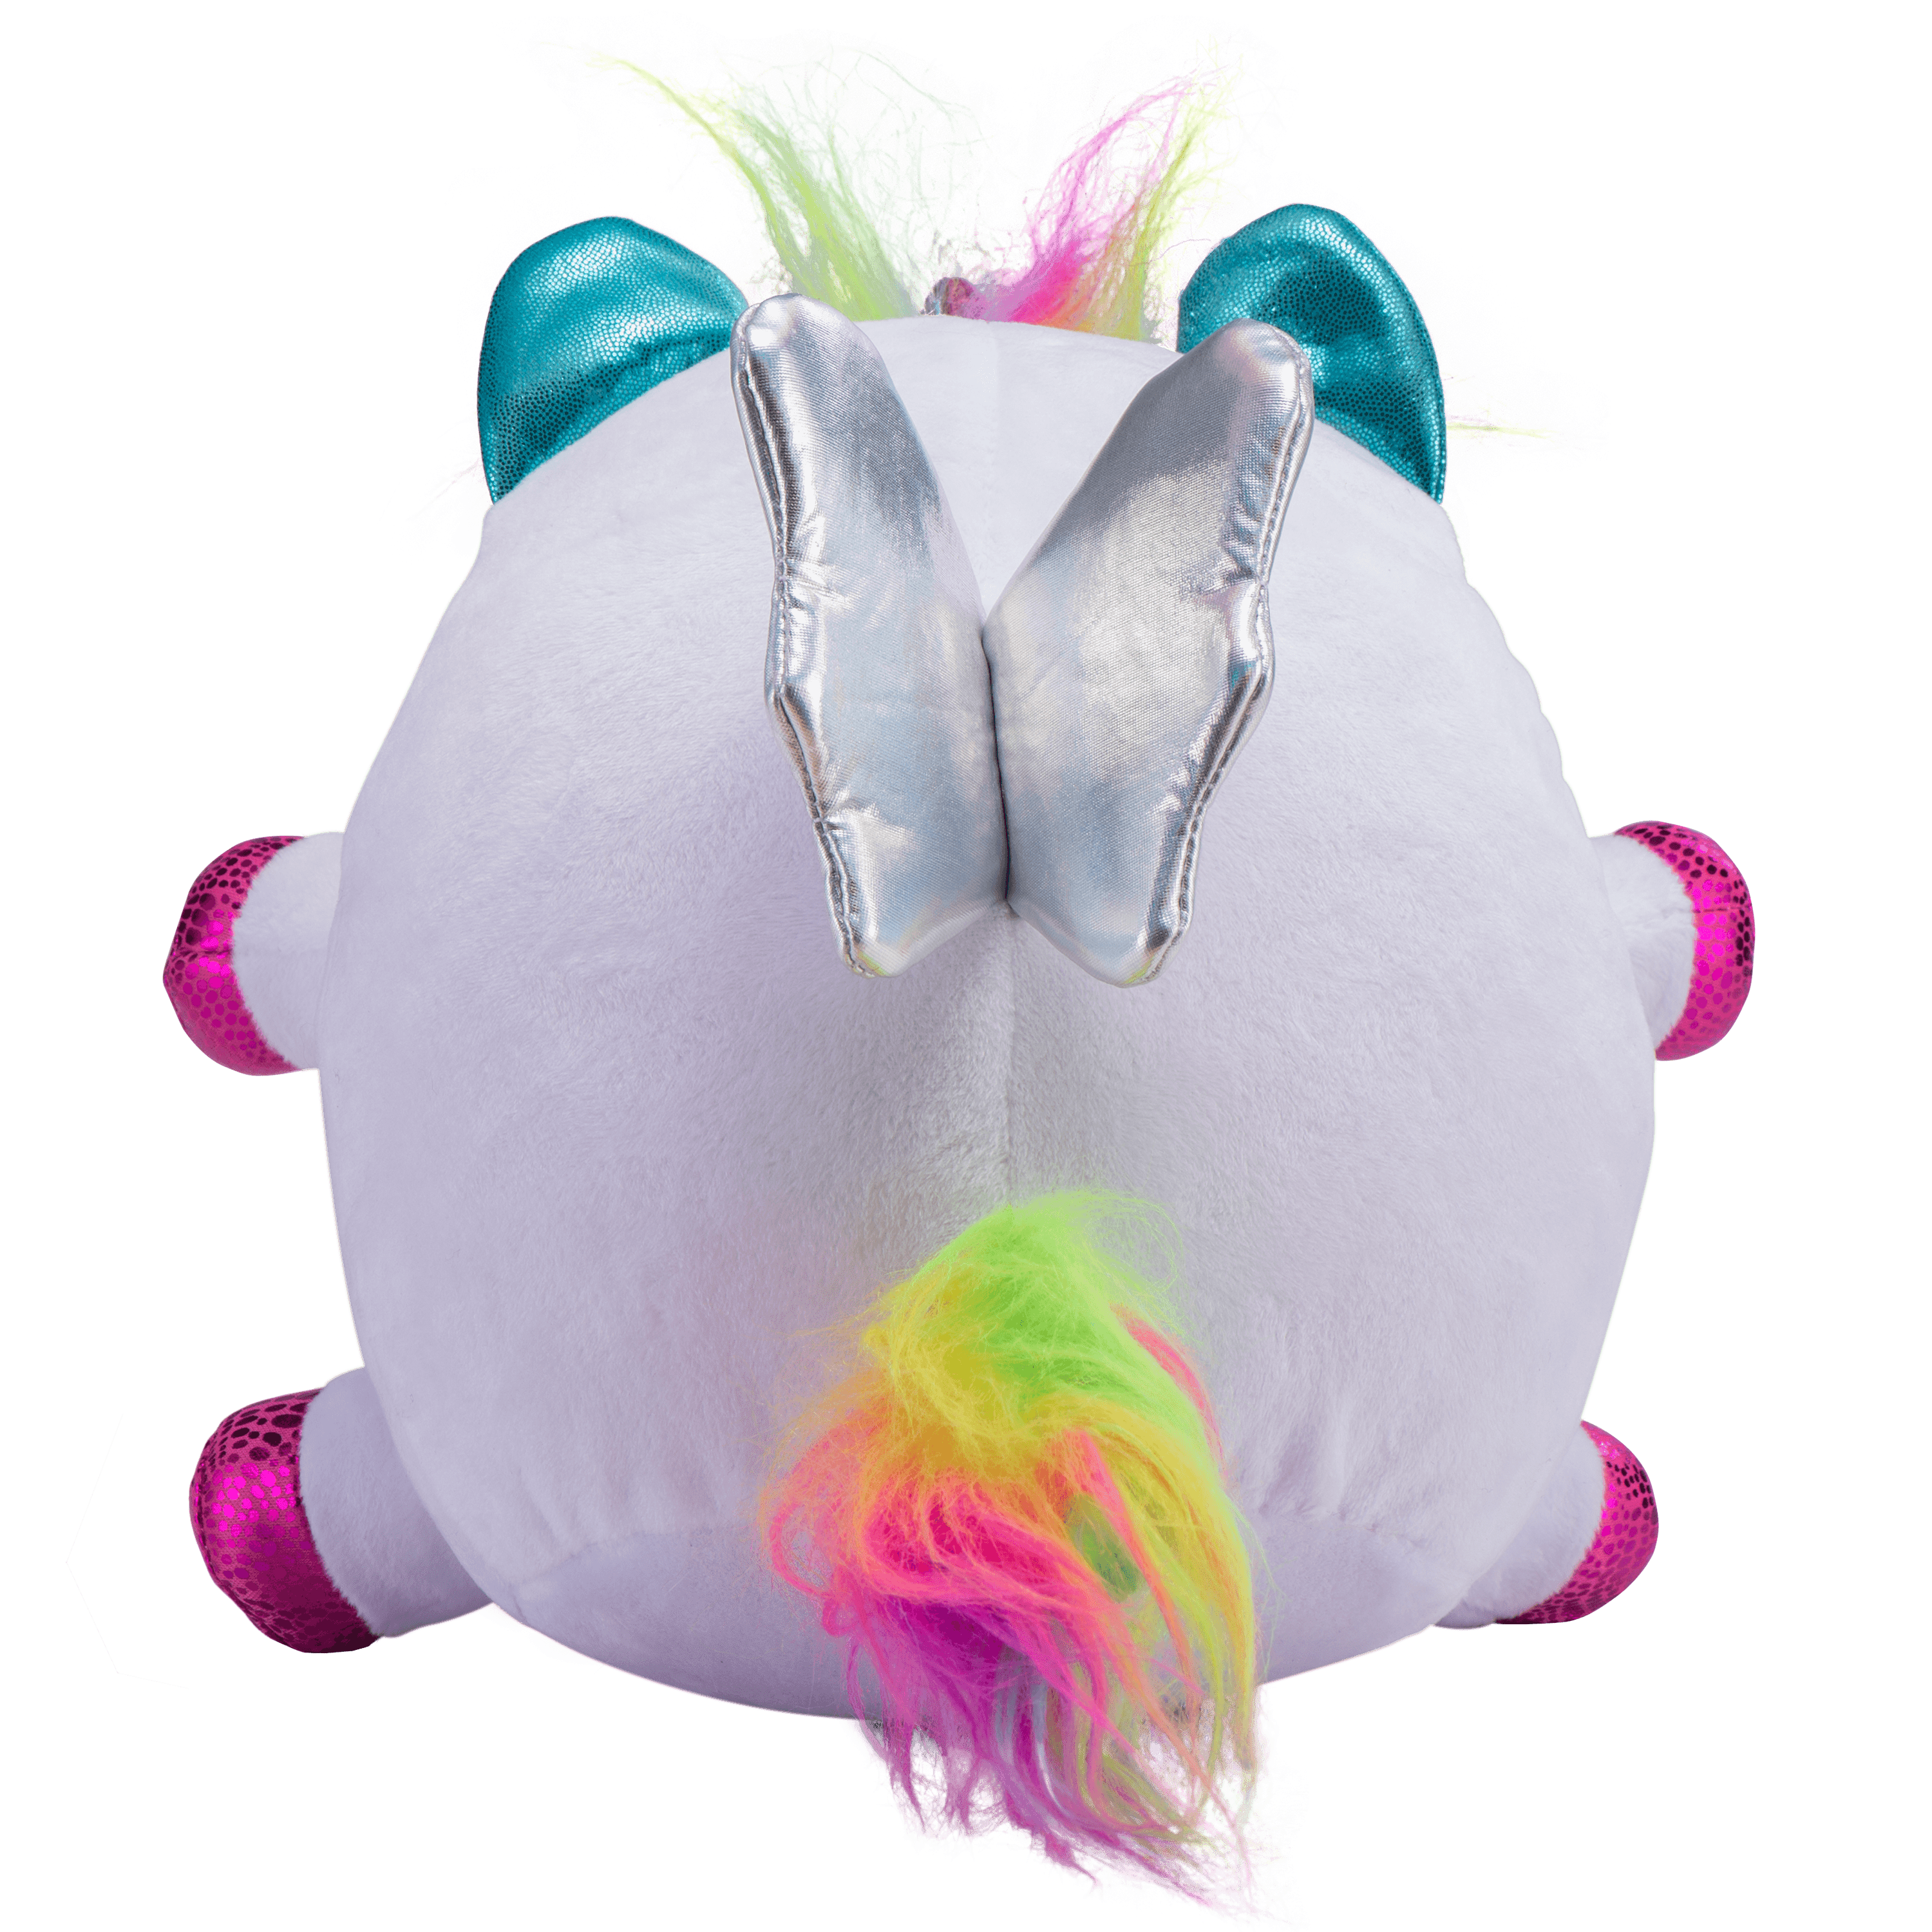 rainbocorns unicorn plush toy